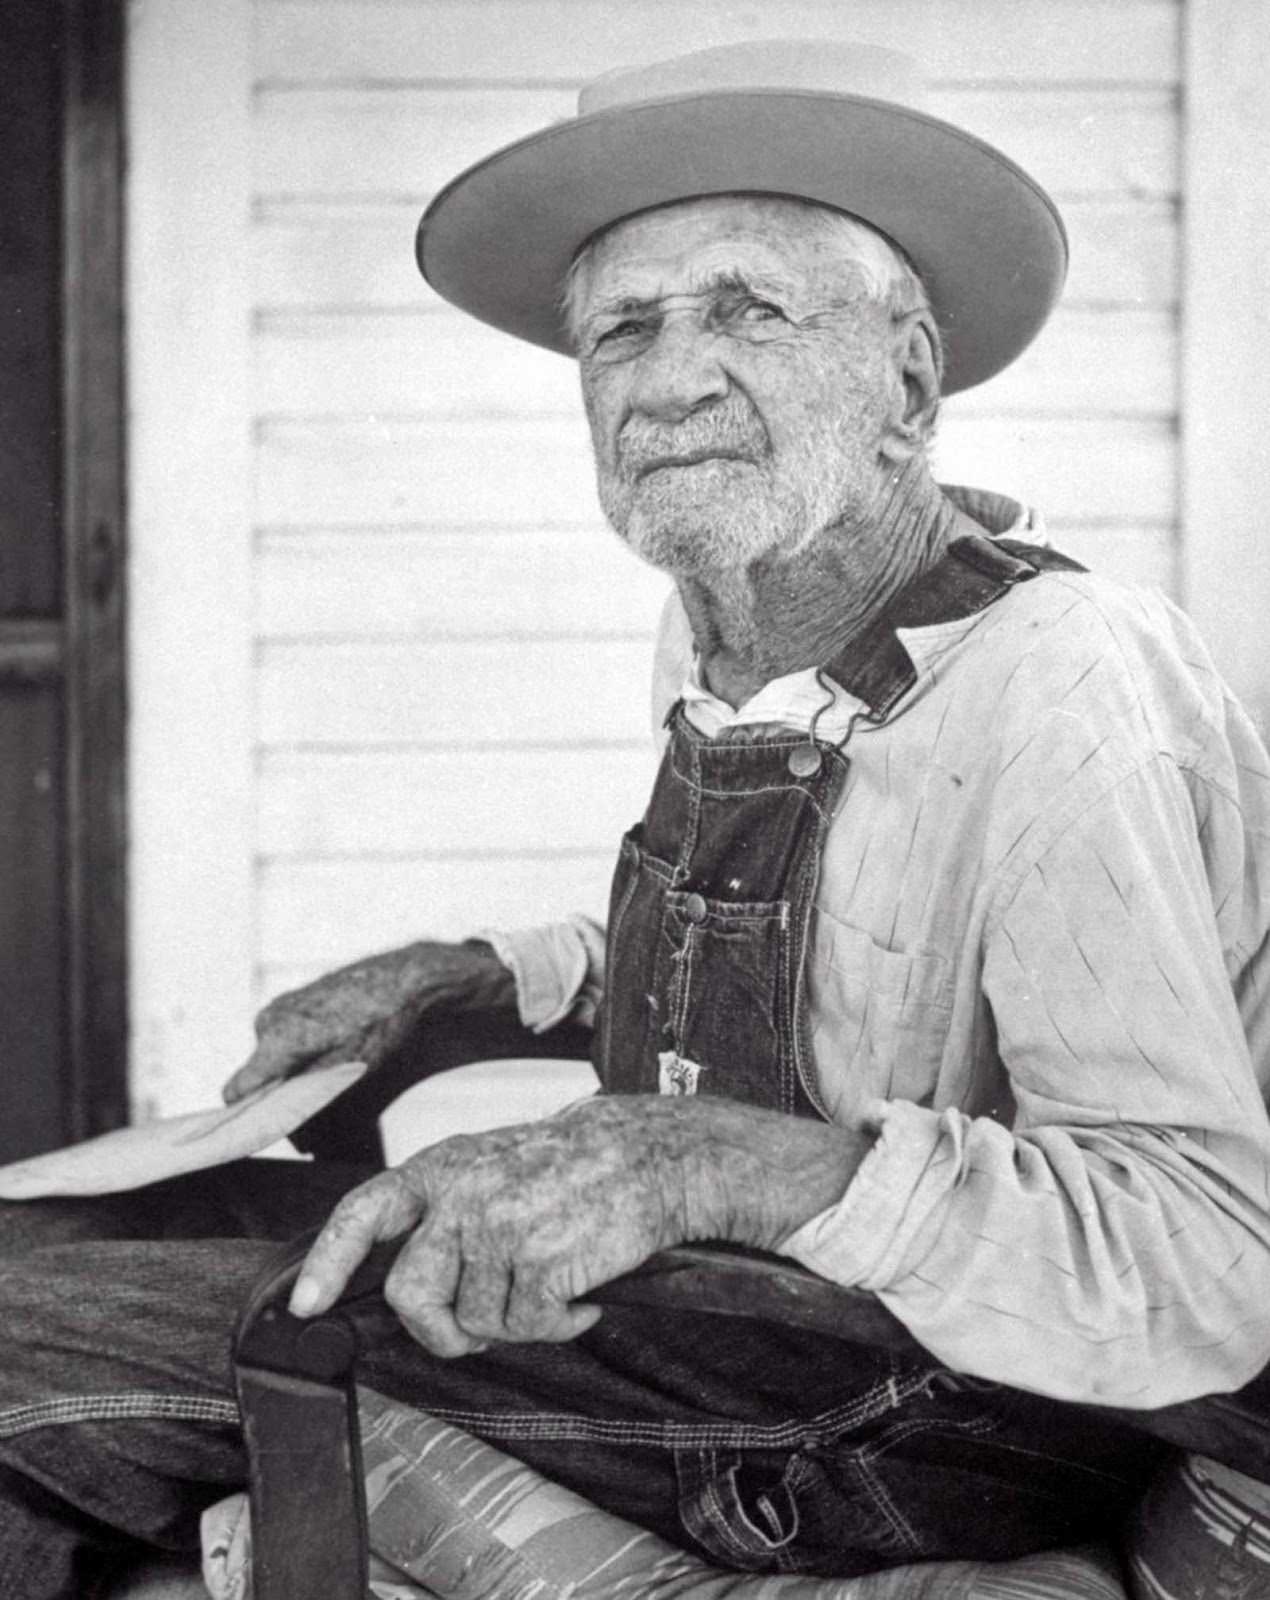 Self-proclaimed “Confederate Civil War veteran” William Lundy sitting on his porch. 1956.